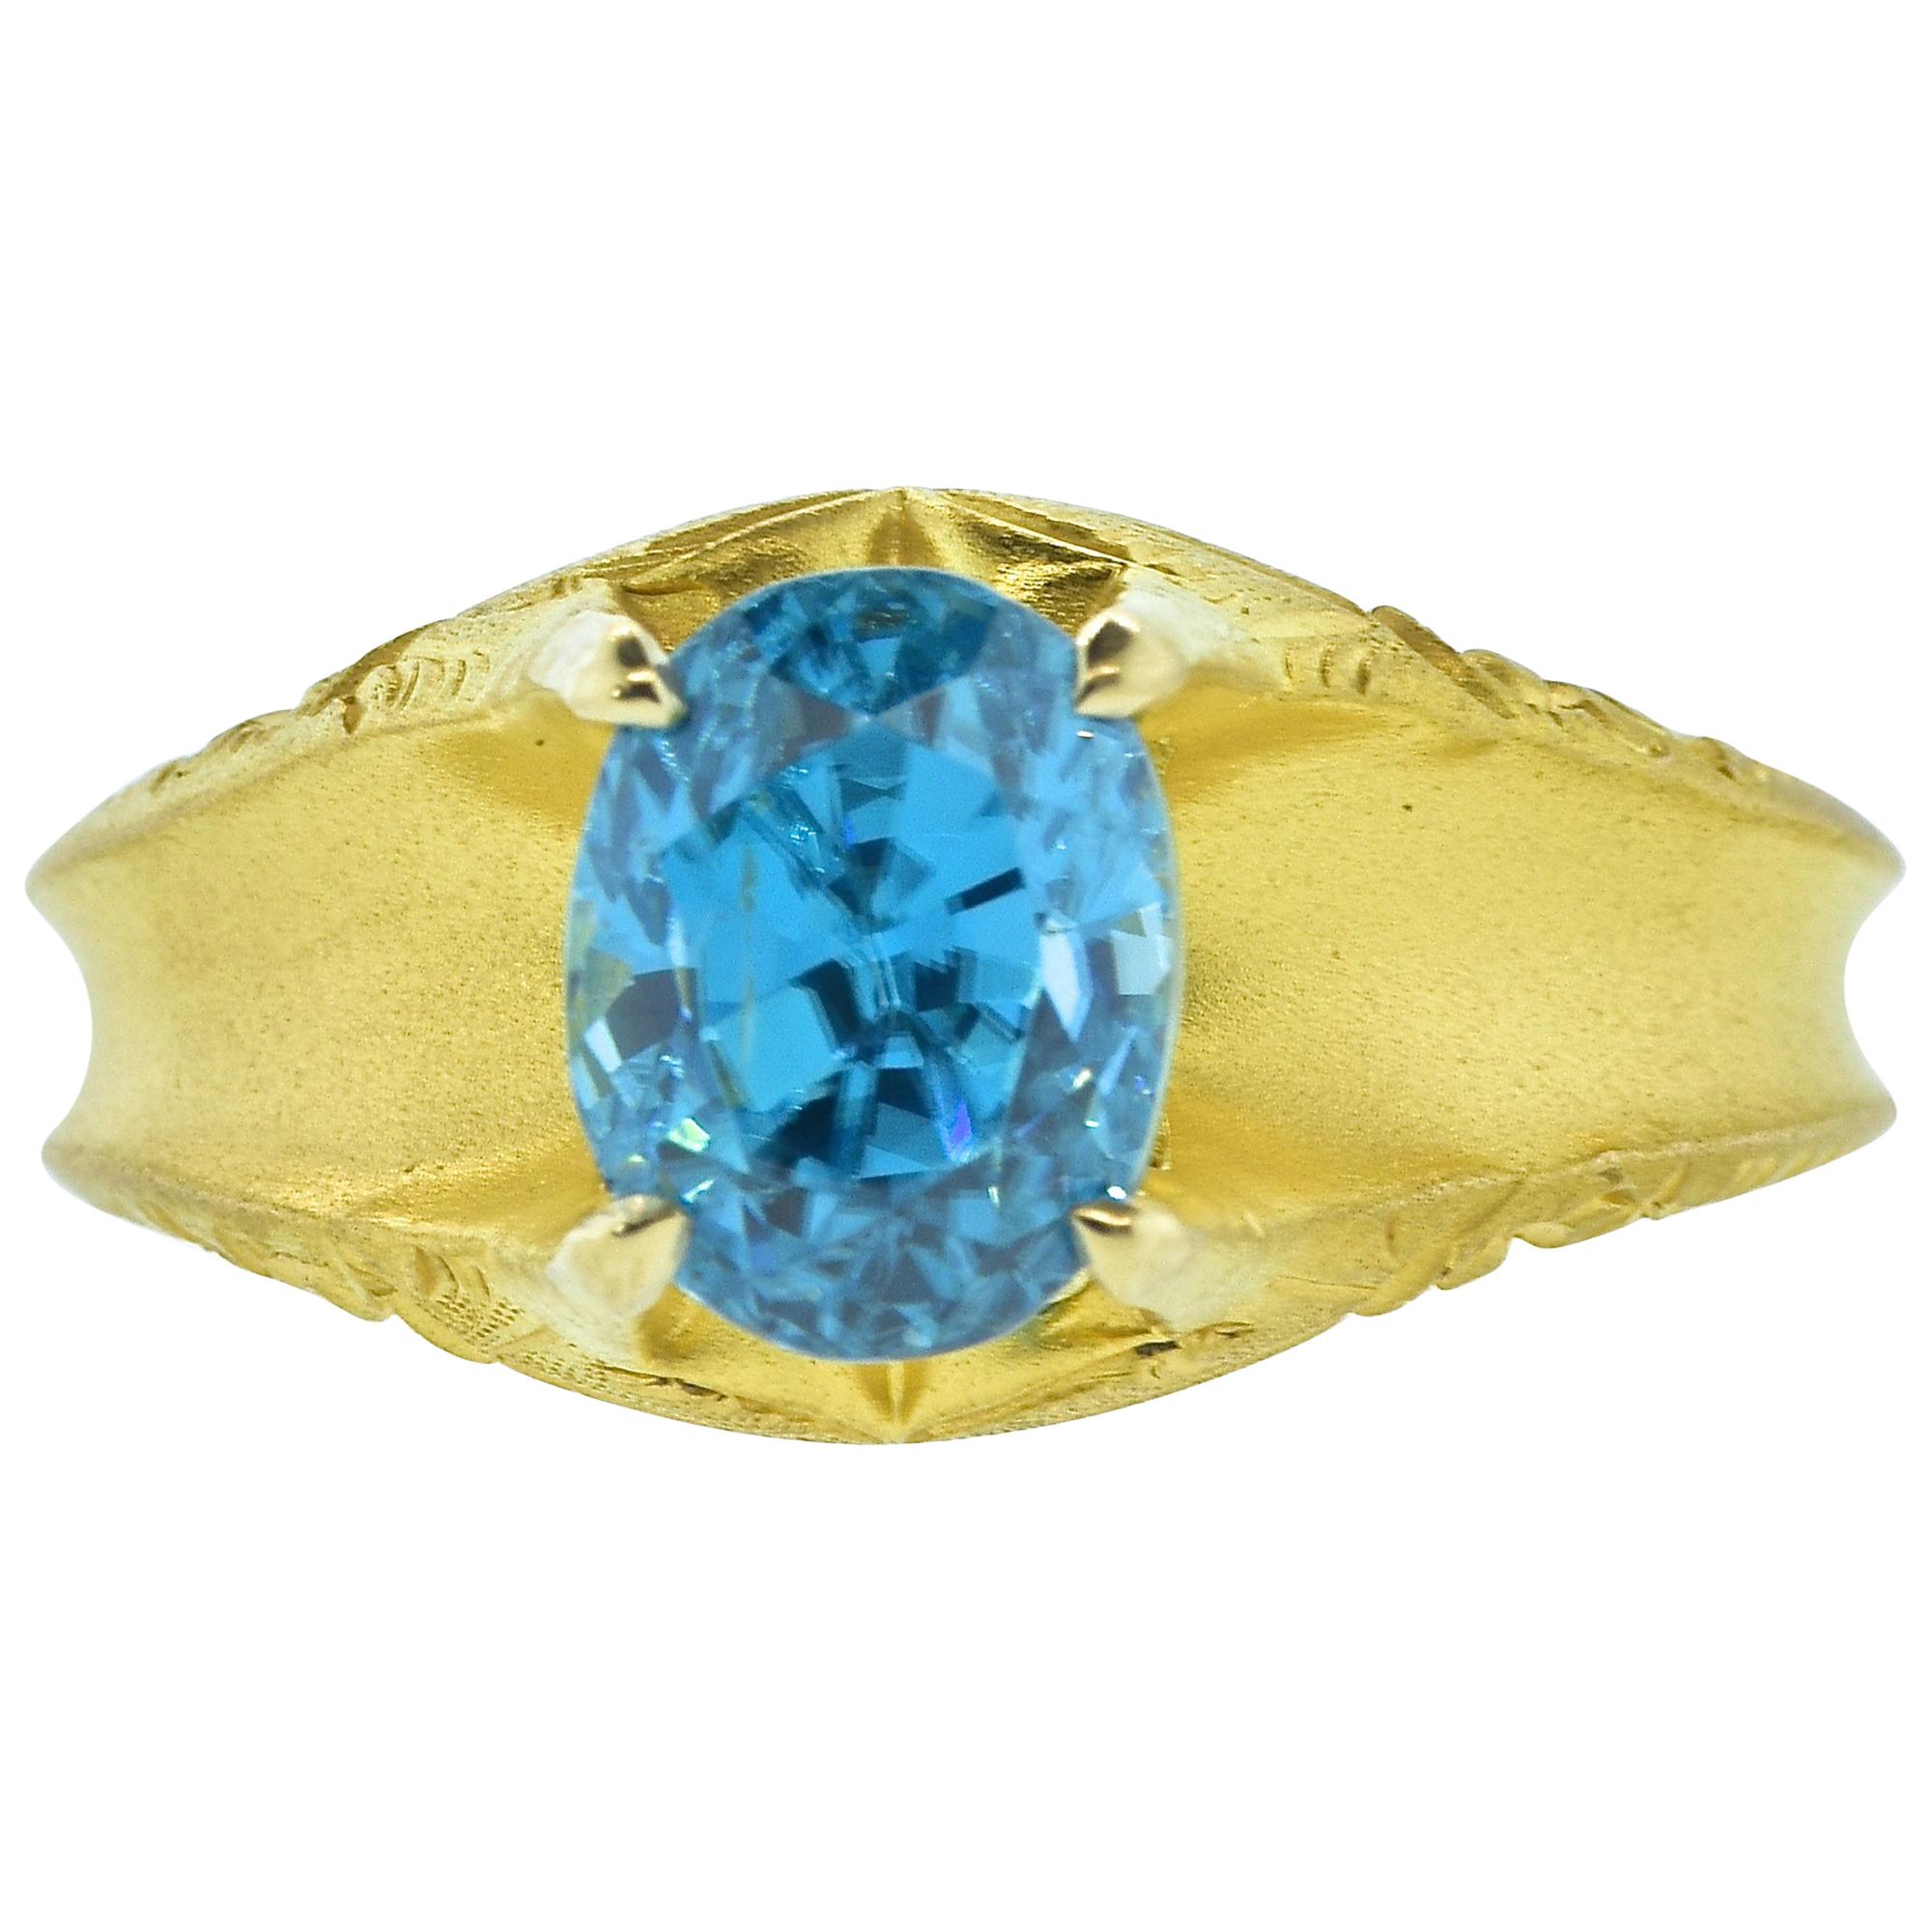 Victorian Gold Ring Centering a Natural Very Fine Blue Zircon, circa 1890